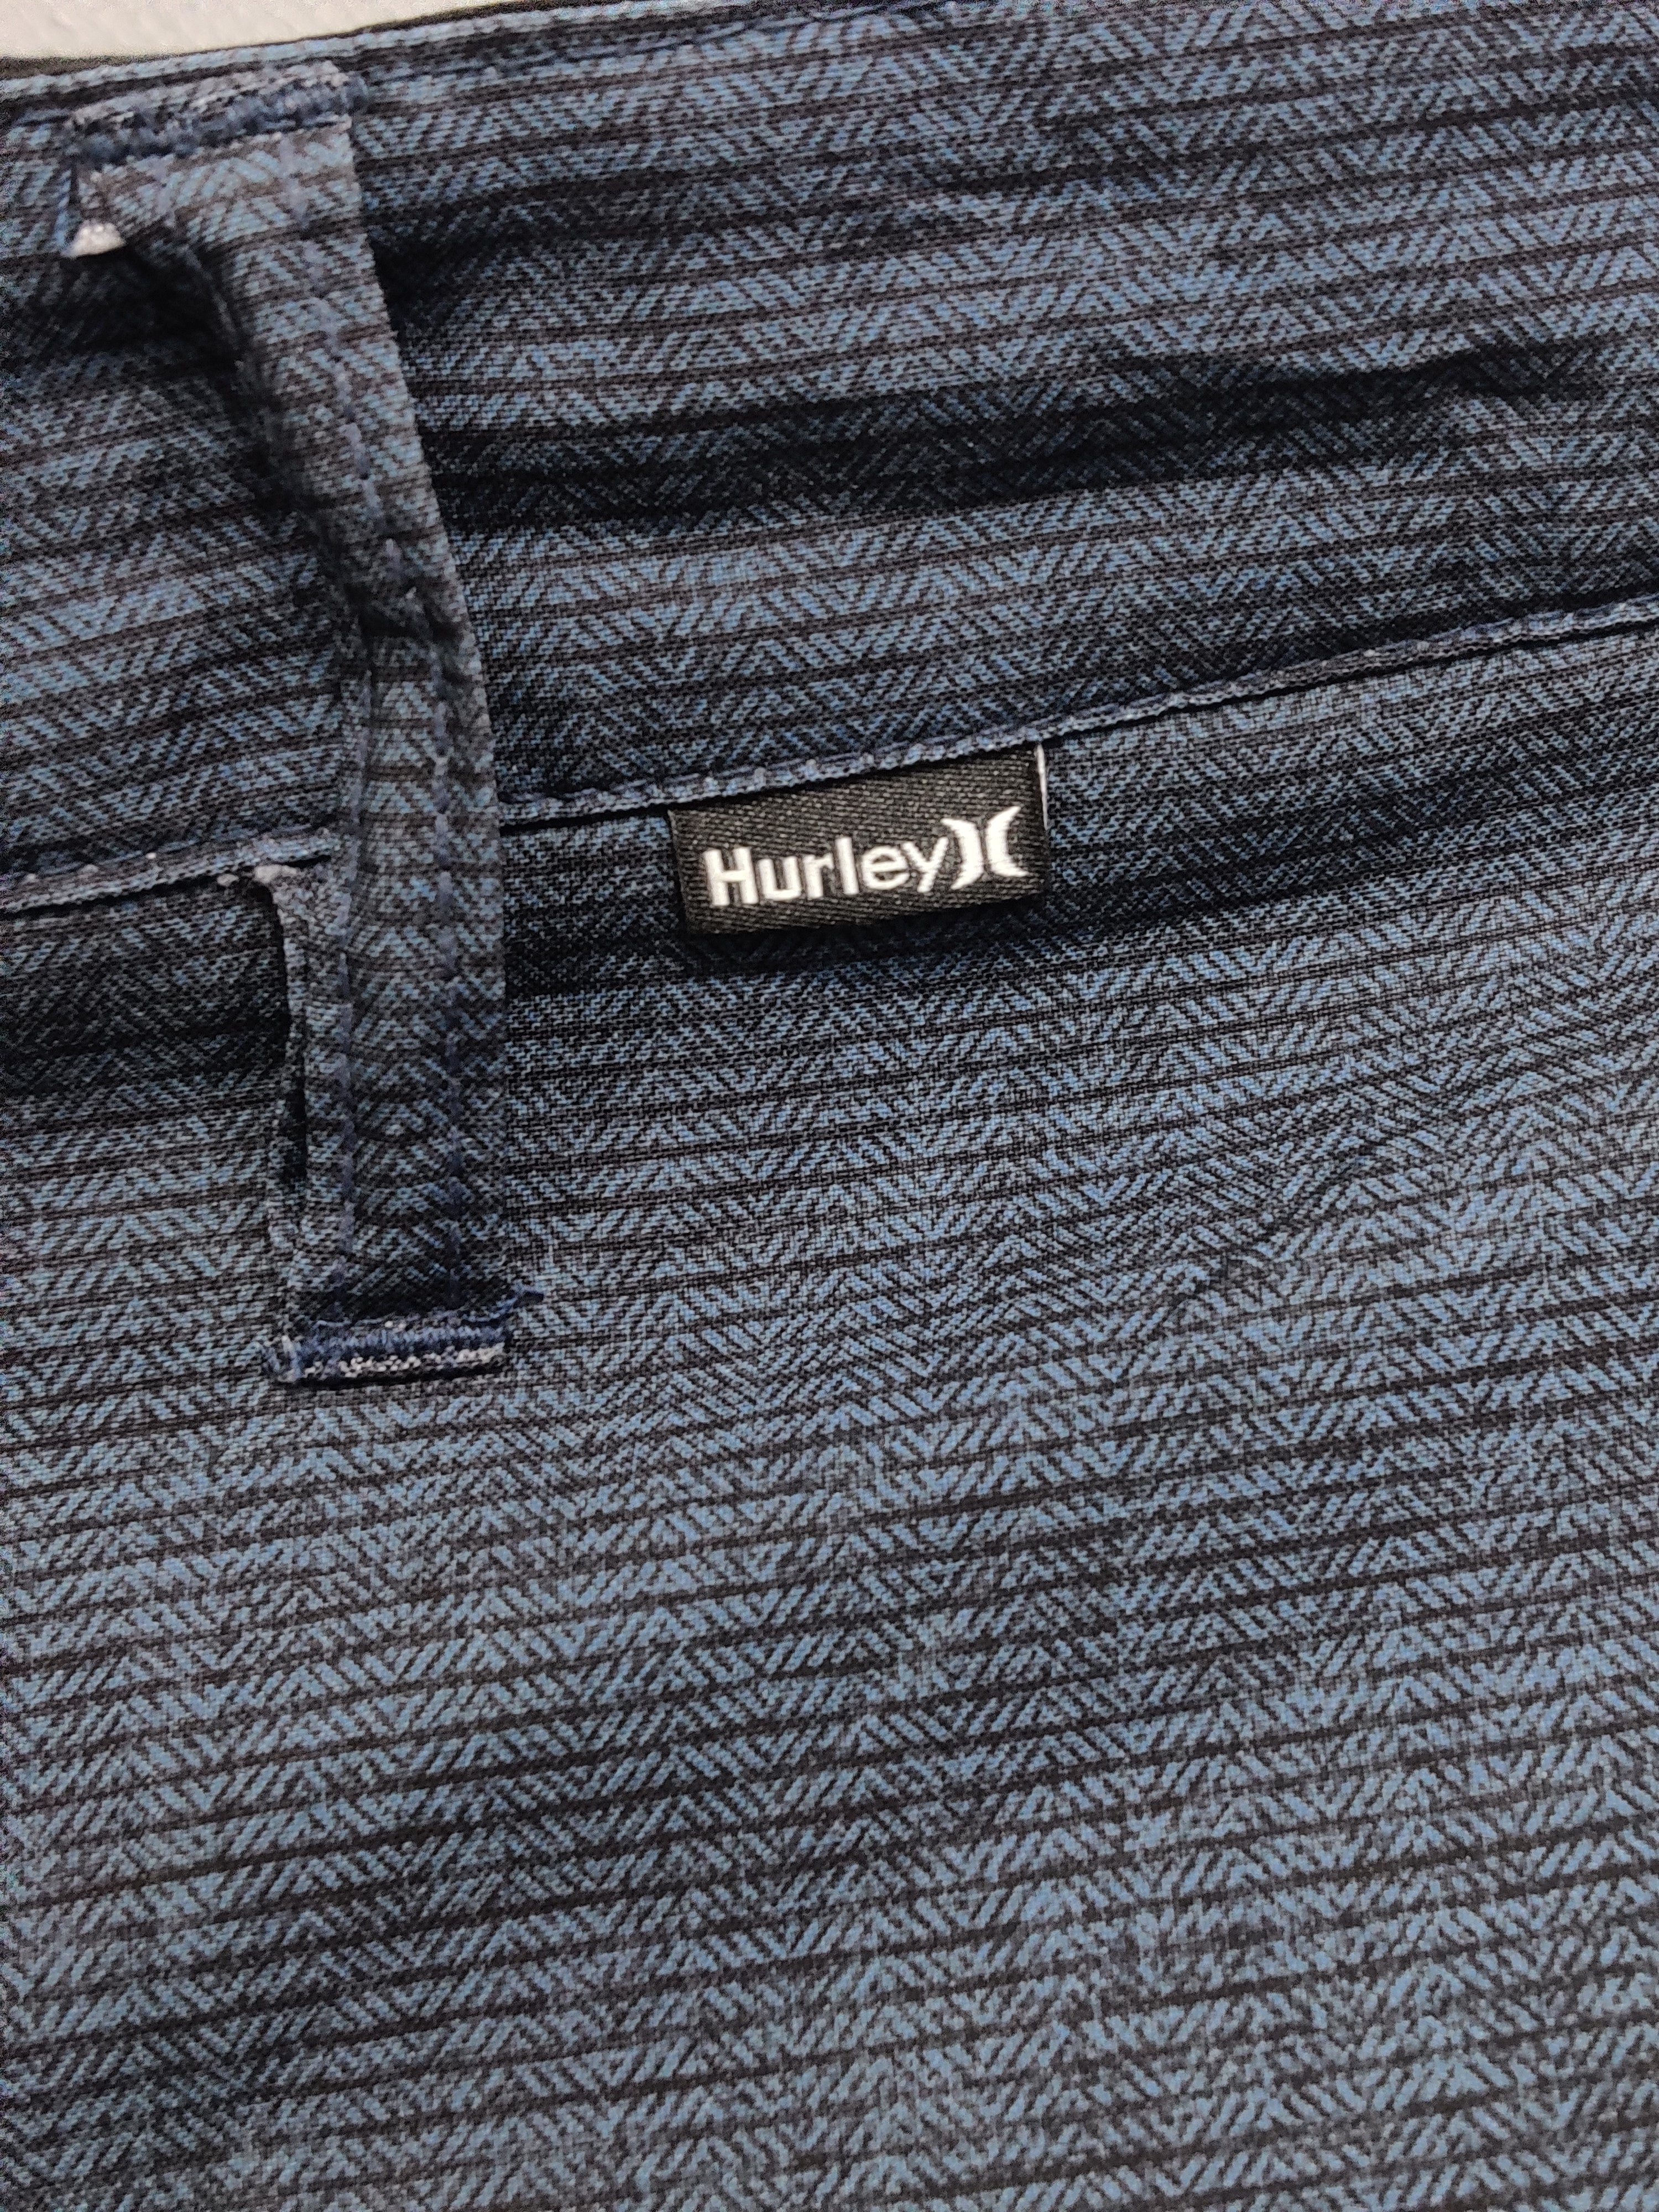 Hurley  Branded Original Cotton Short For Men